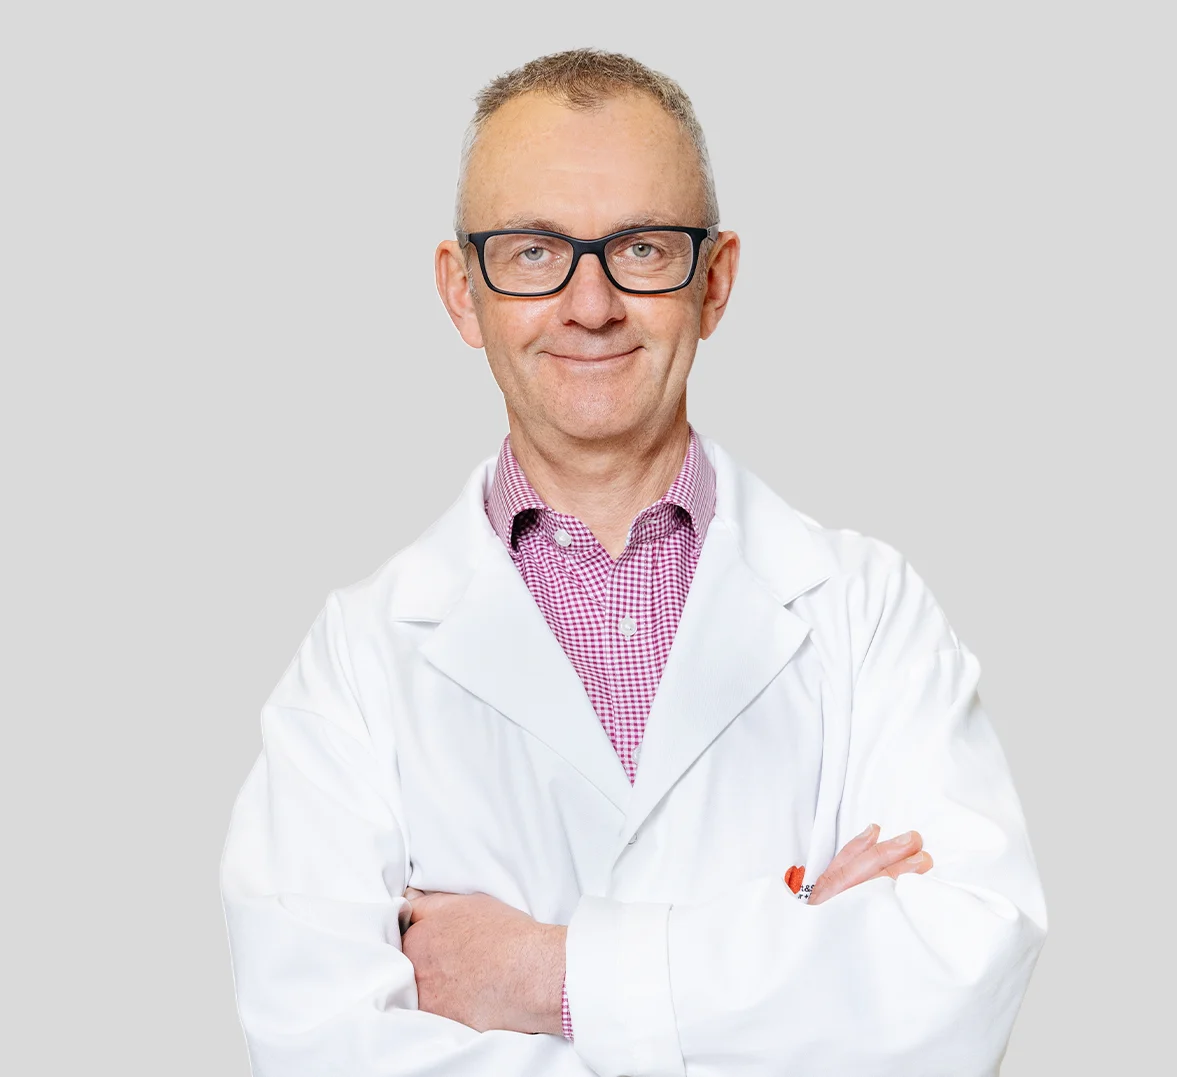 Heart & Stroke researcher Dr. Philip Barber